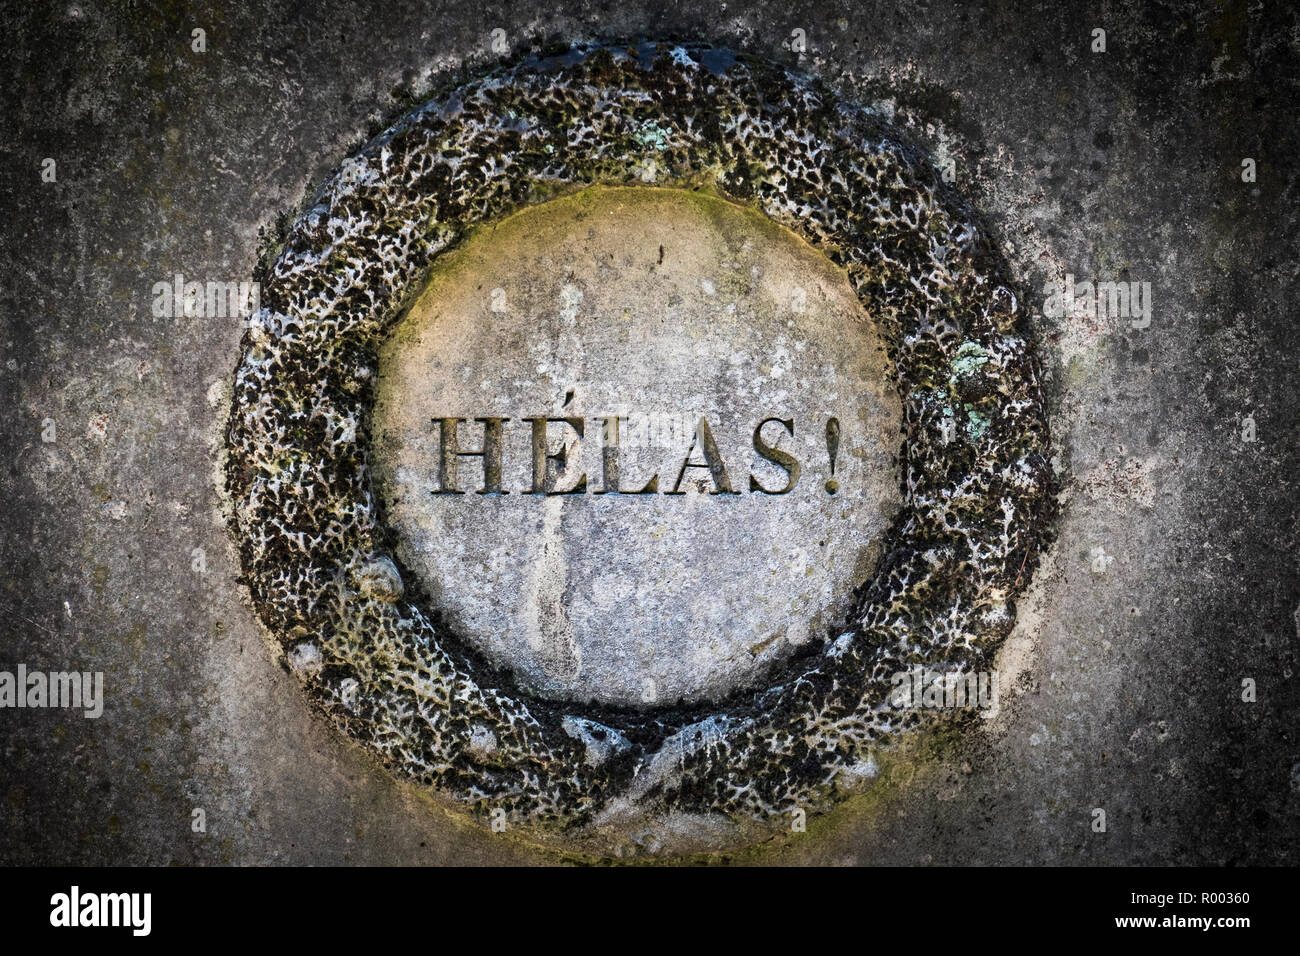 Pietra ghirlanda floreale con l'iscrizione:"helas!' Foto Stock